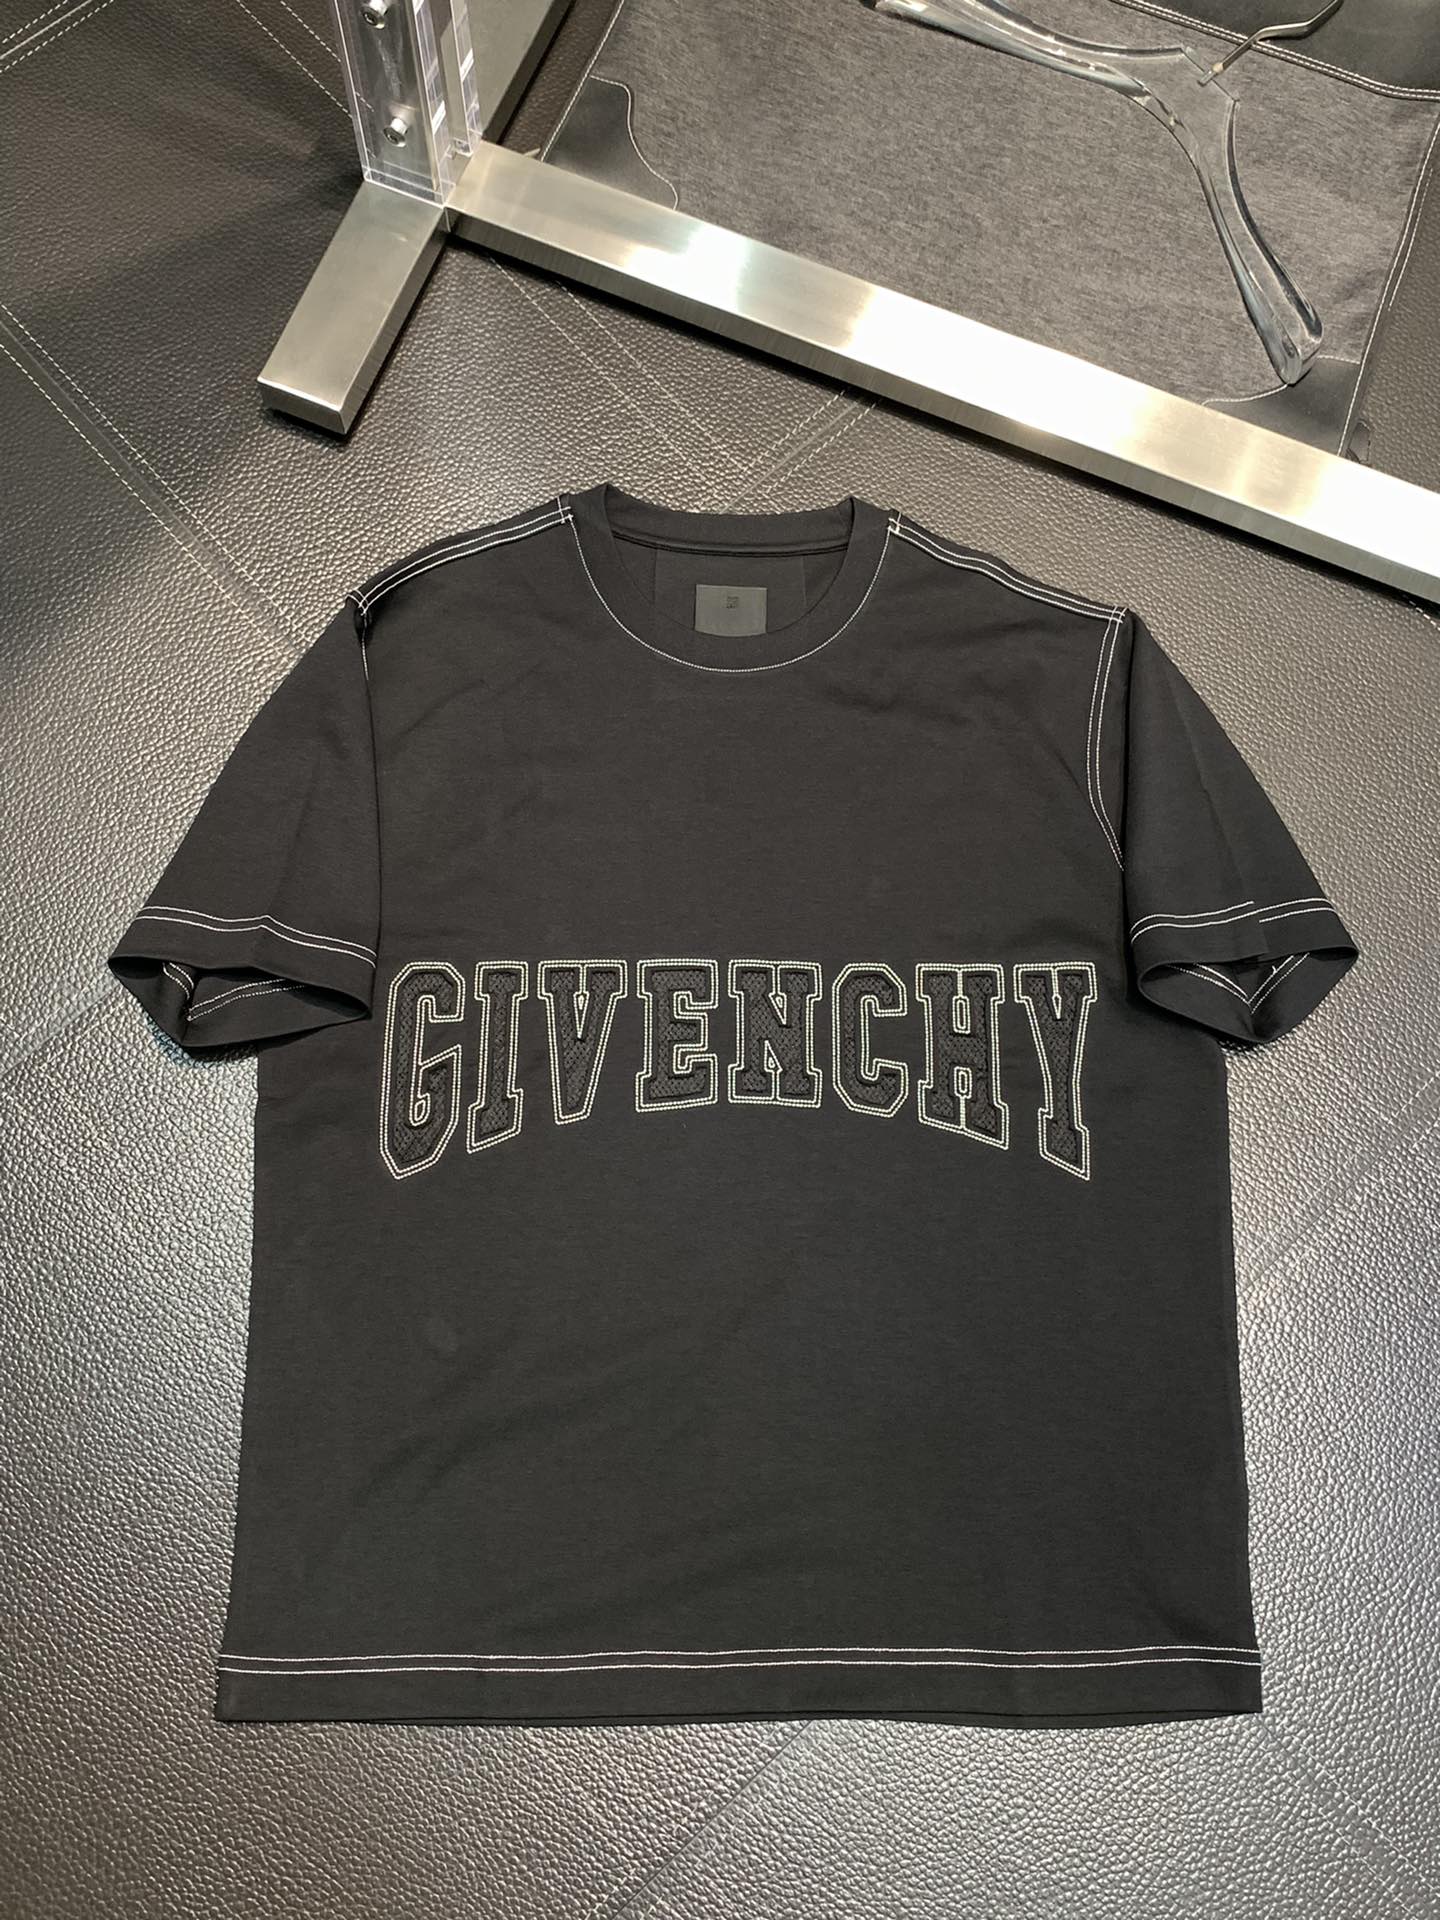 Givenchy Flawless
 Clothing T-Shirt Men Fashion Short Sleeve